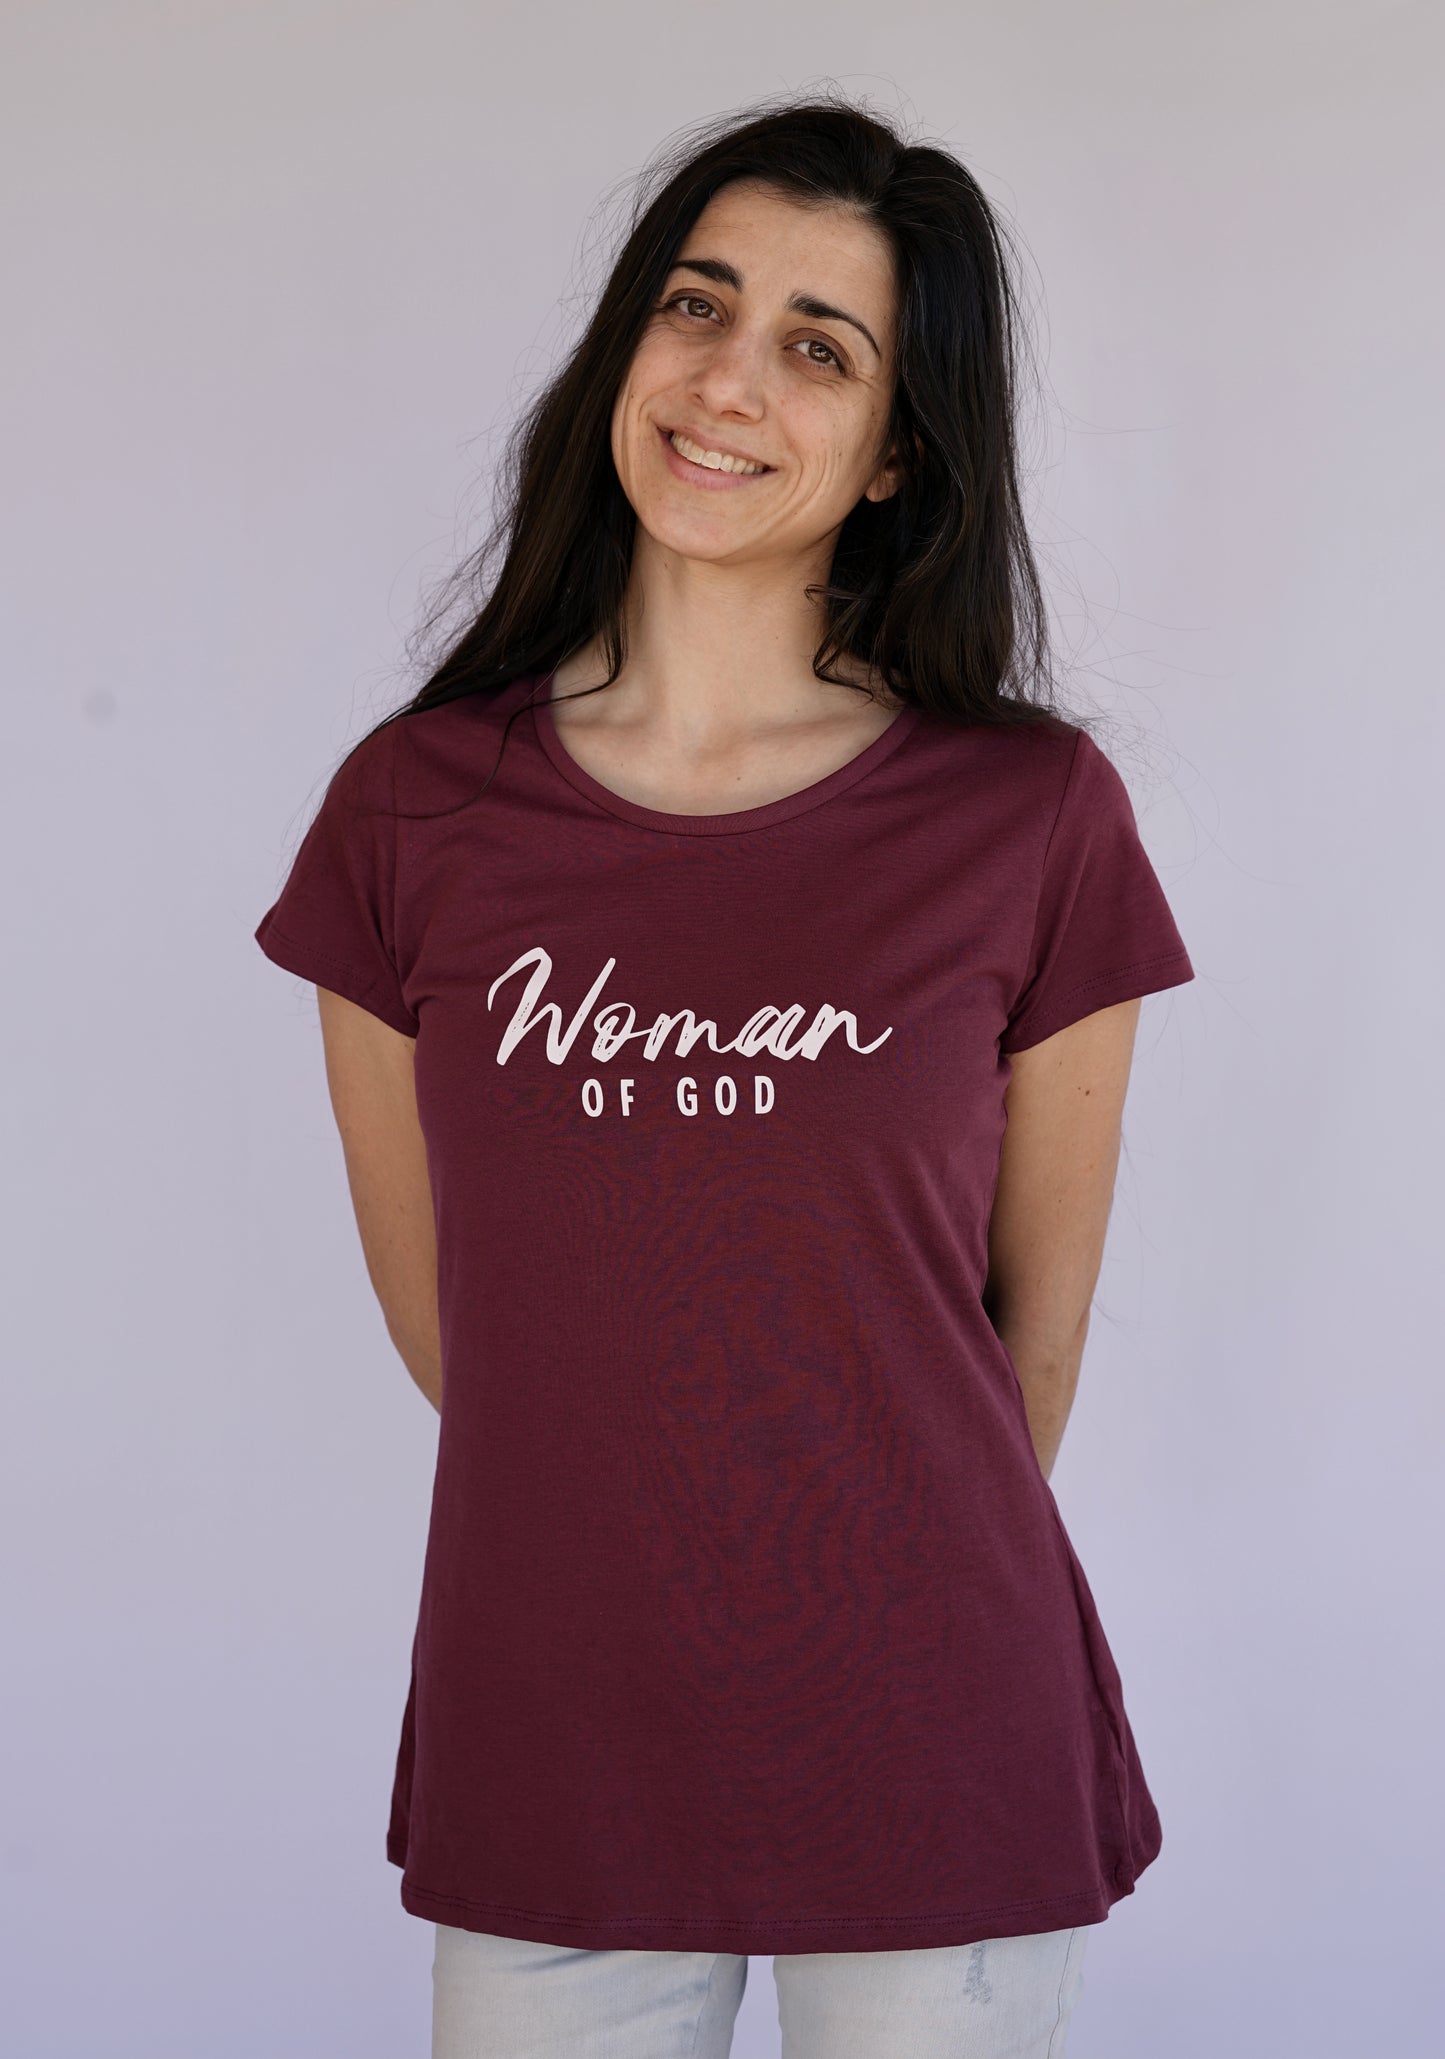 Woman of God - T-Shirt